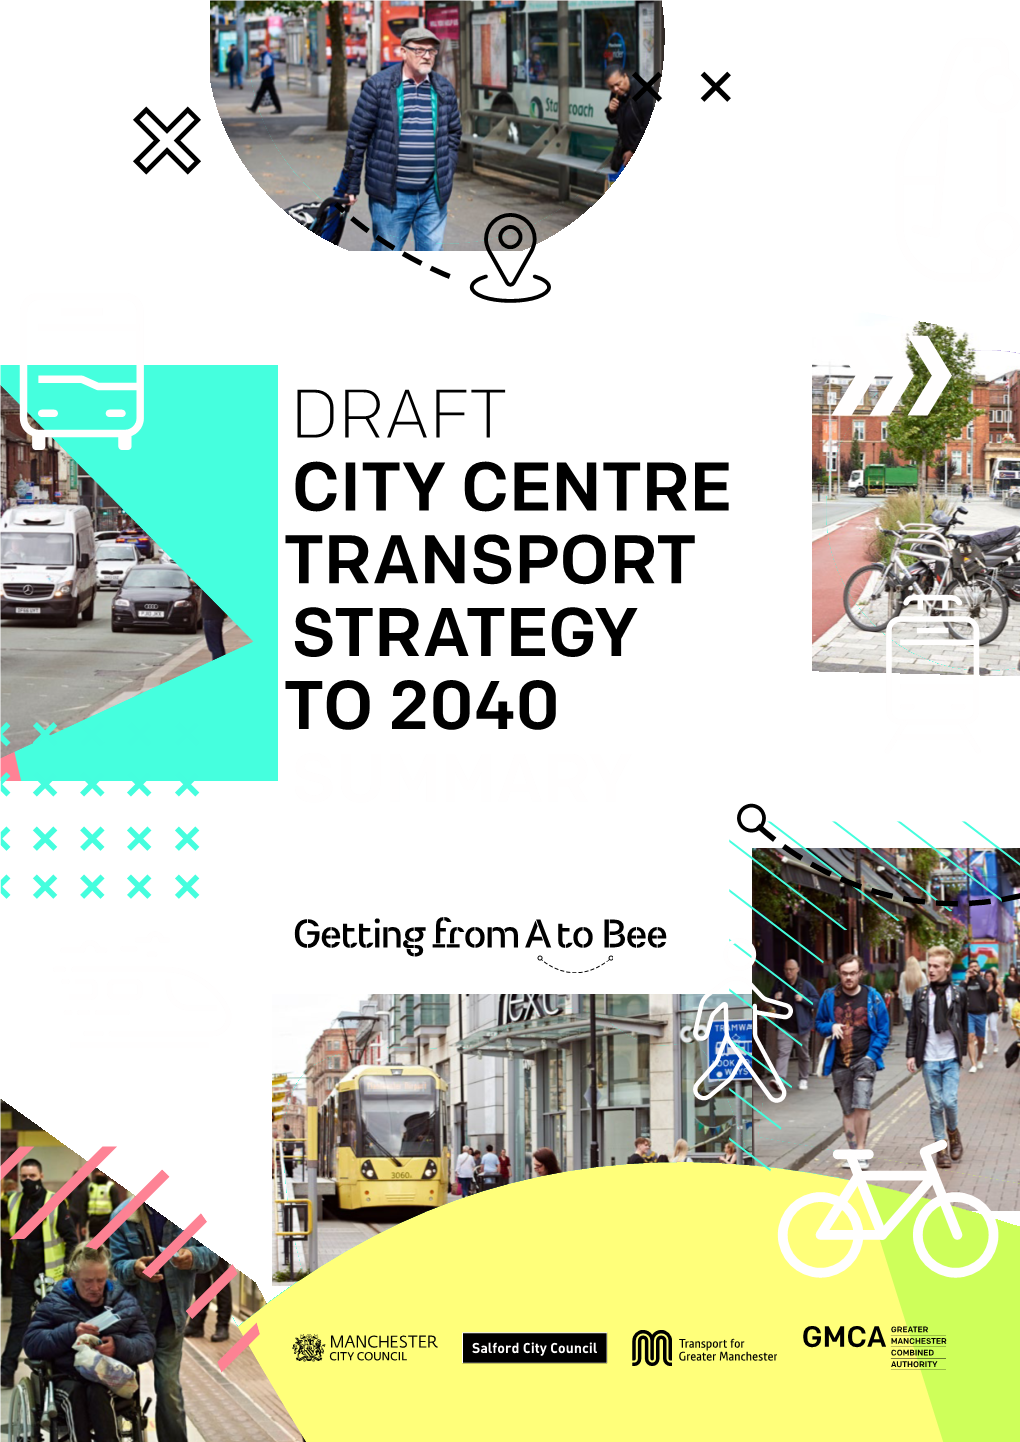 Draft City Centre Transport Strategy to 2040 Summary